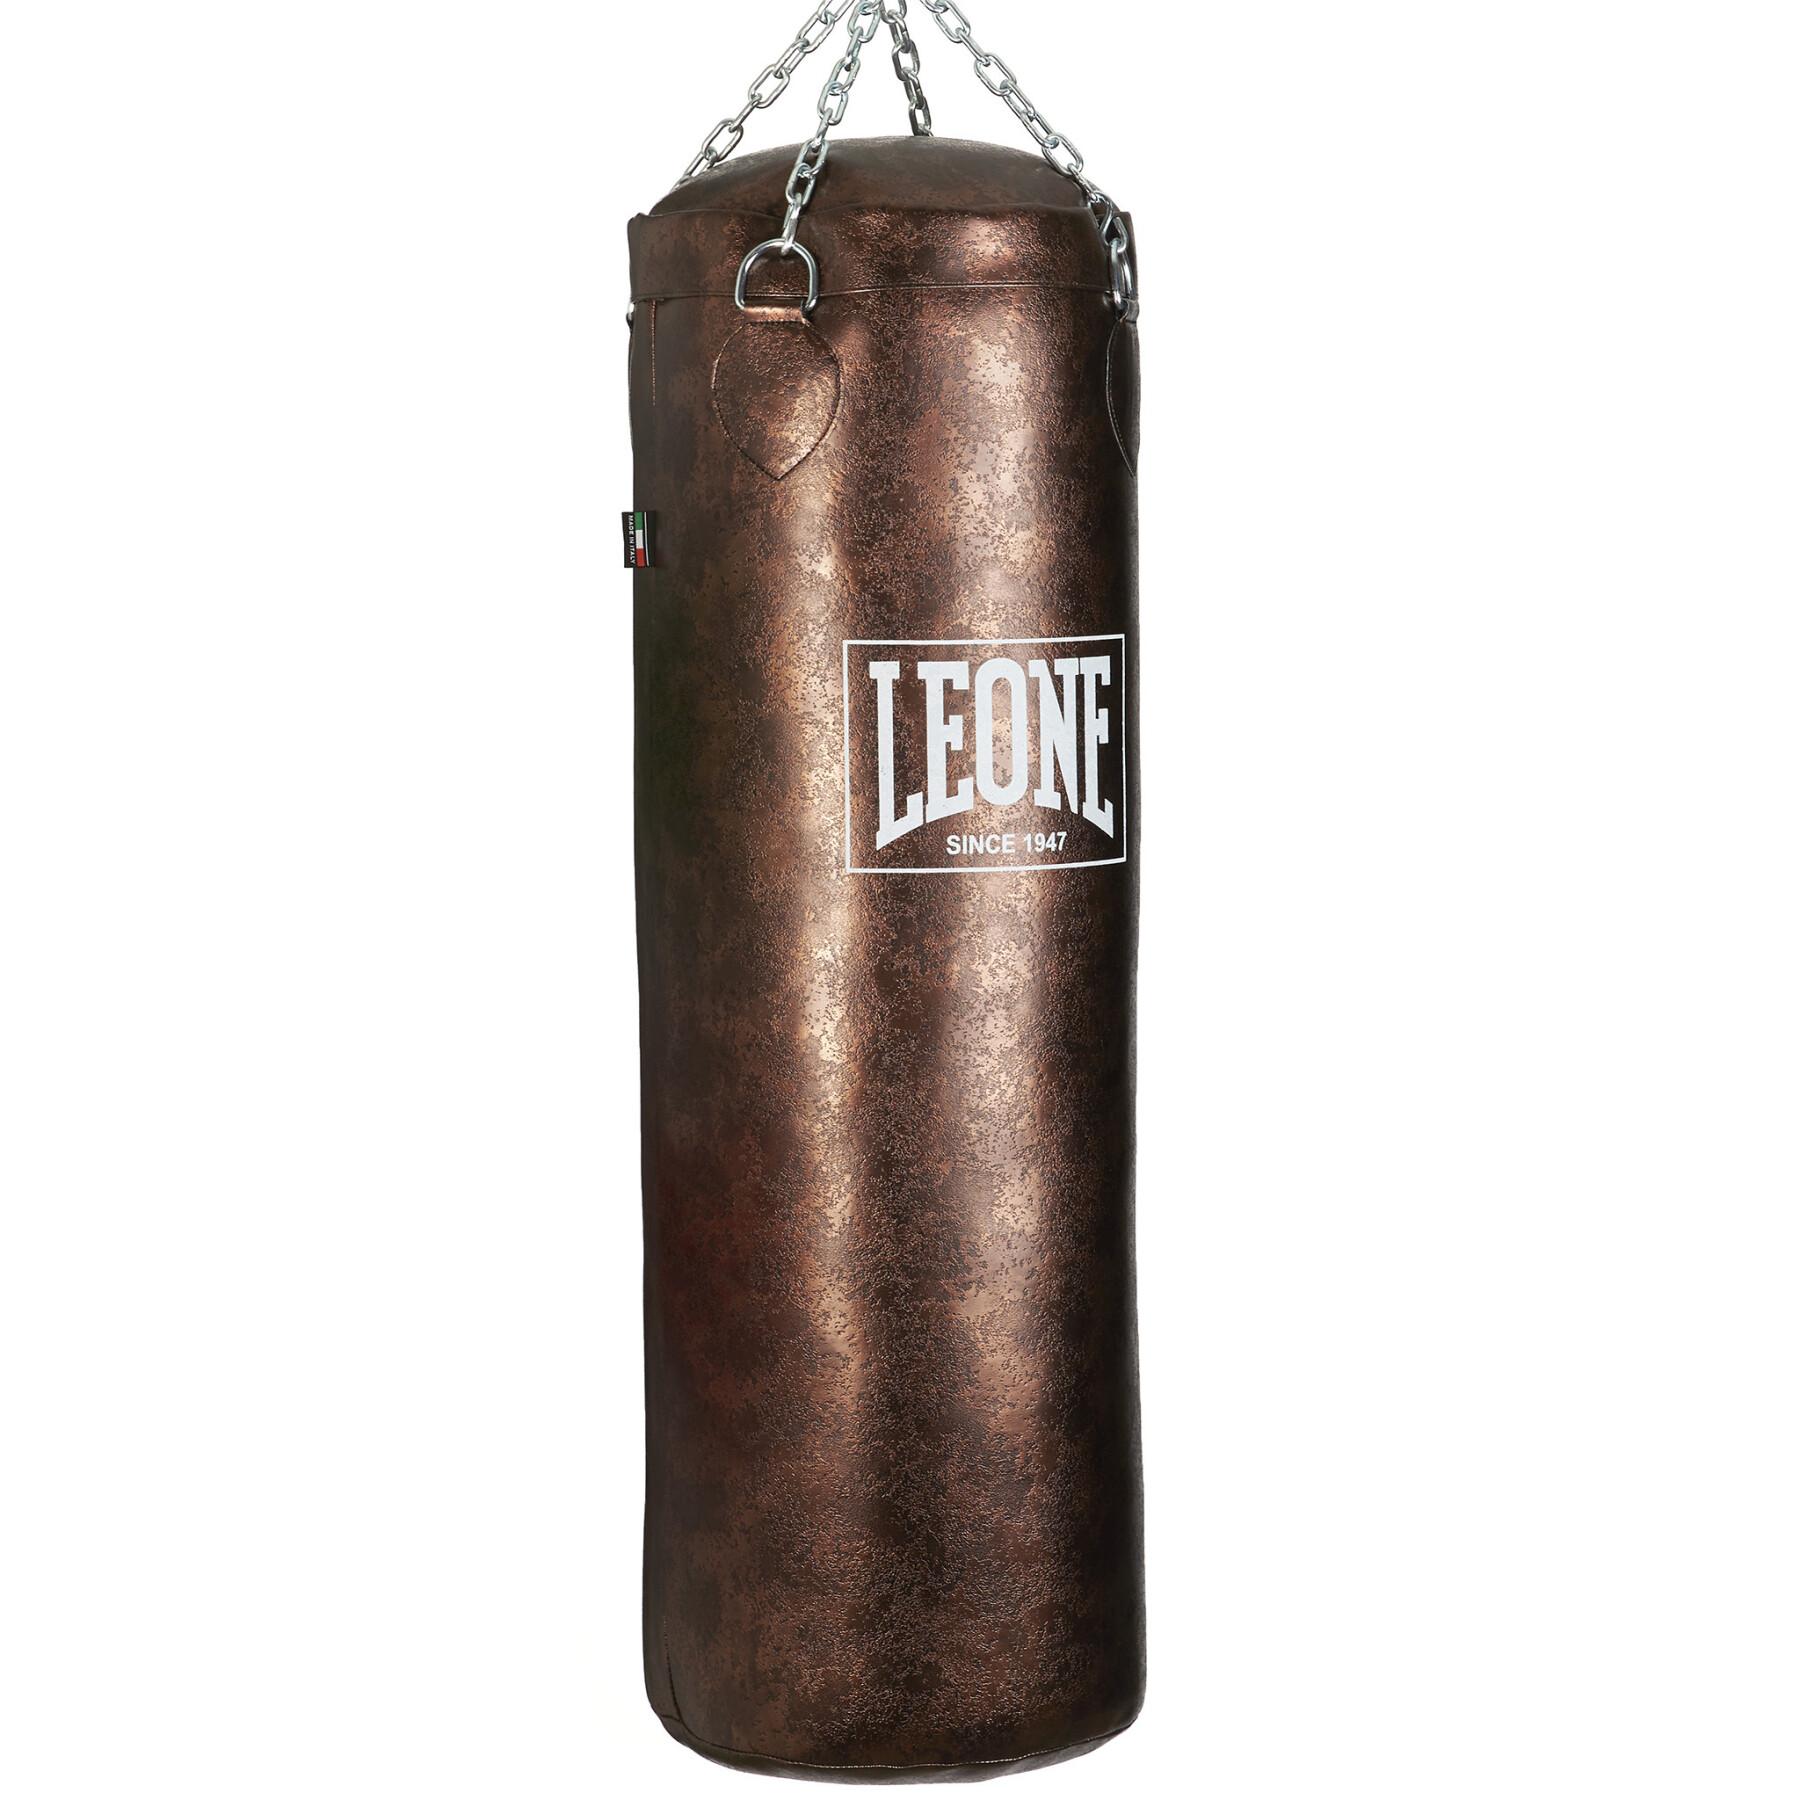 Sacco da boxe Leone vintage bronzo